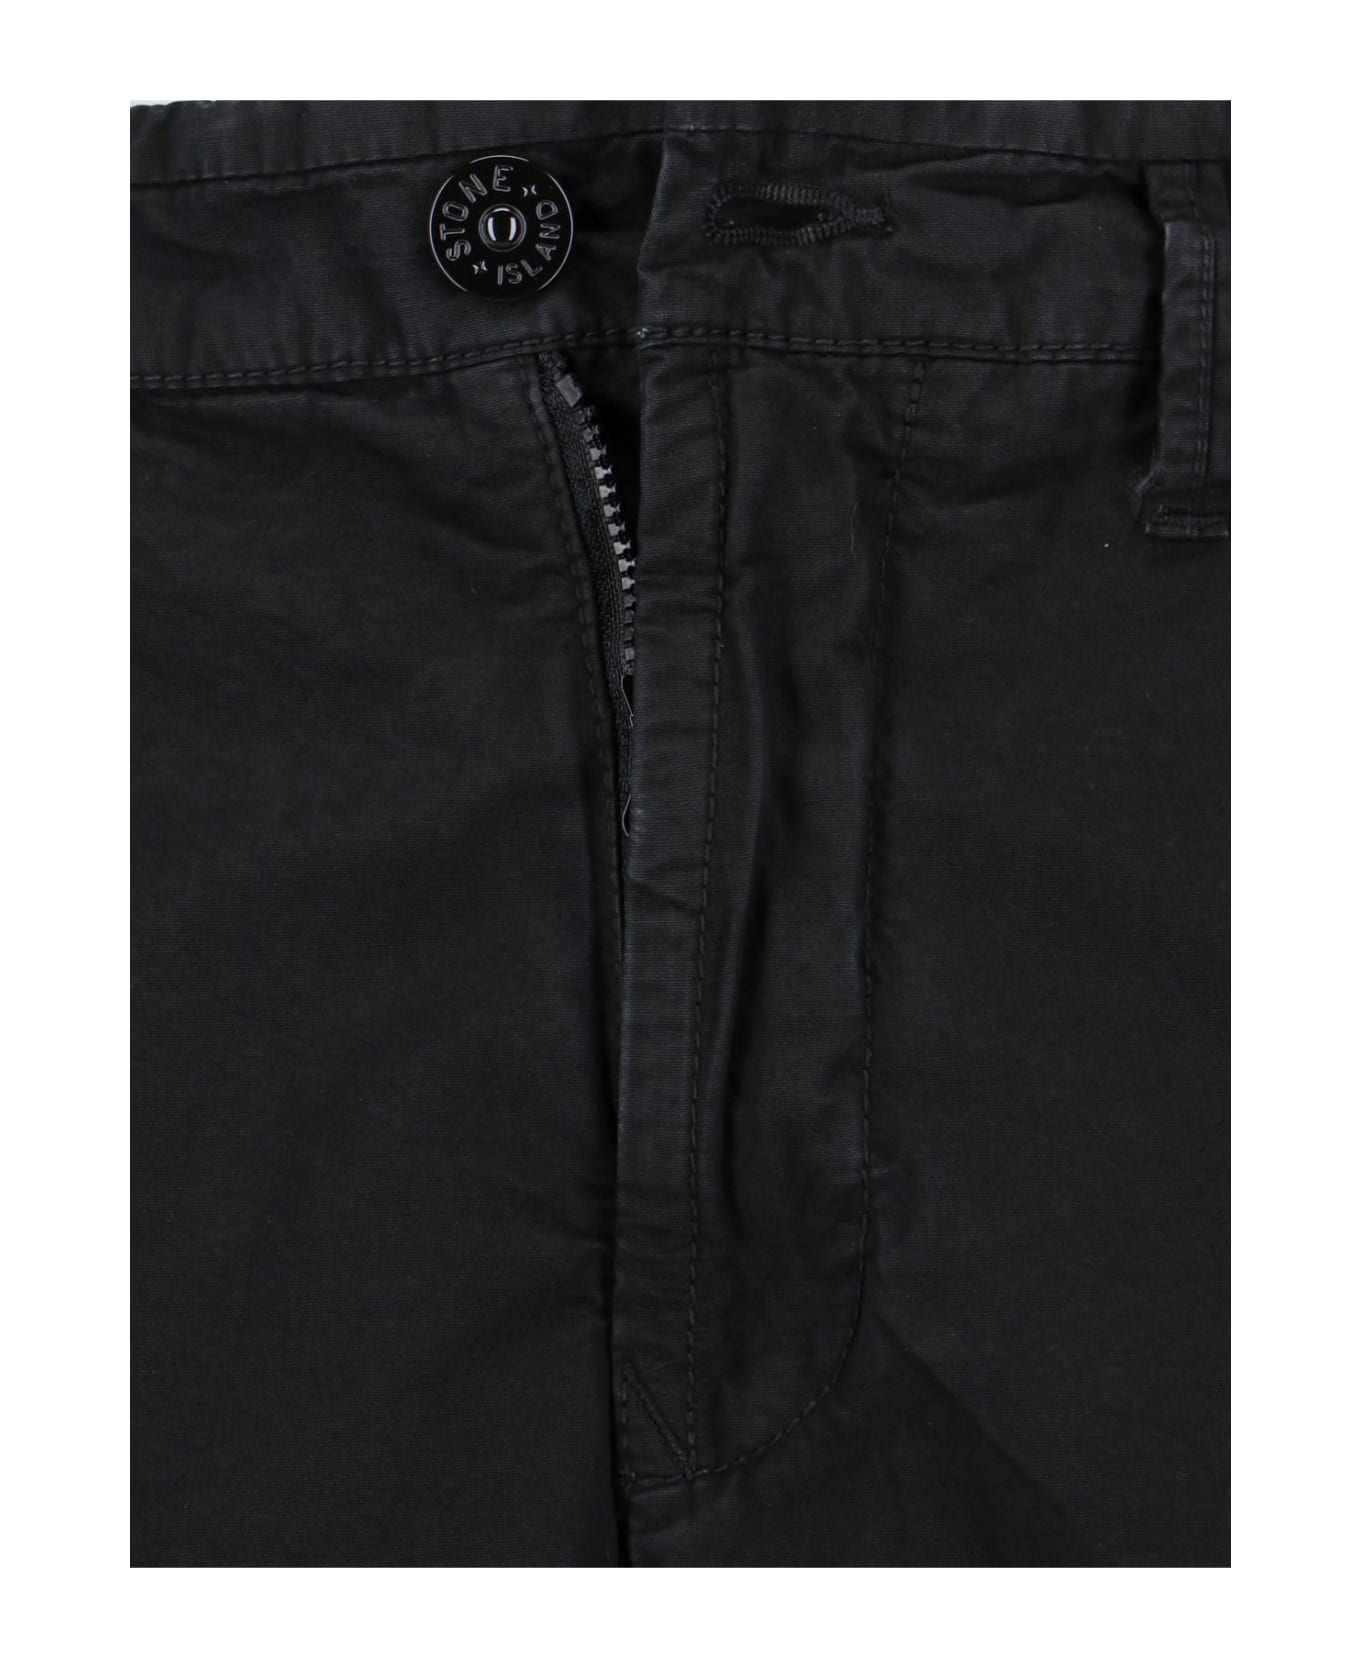 Stone Island Cotton Shorts - BLACK